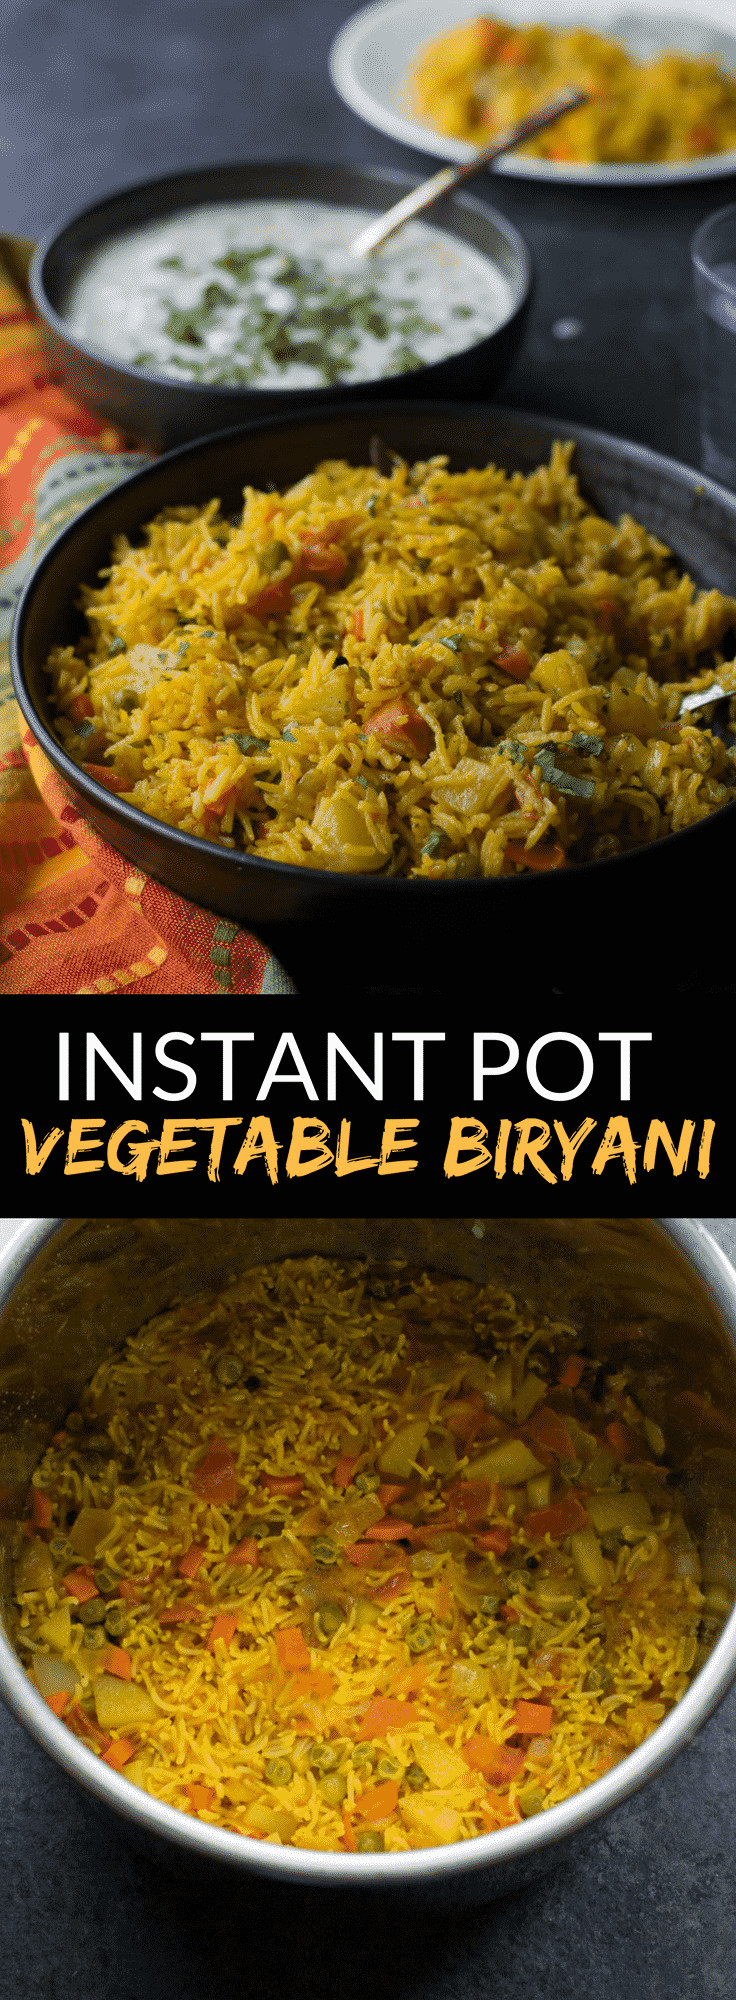 Instant Pot Vegetarian Recipes Indian
 Instant Pot Ve able biryani recipe How to make veg